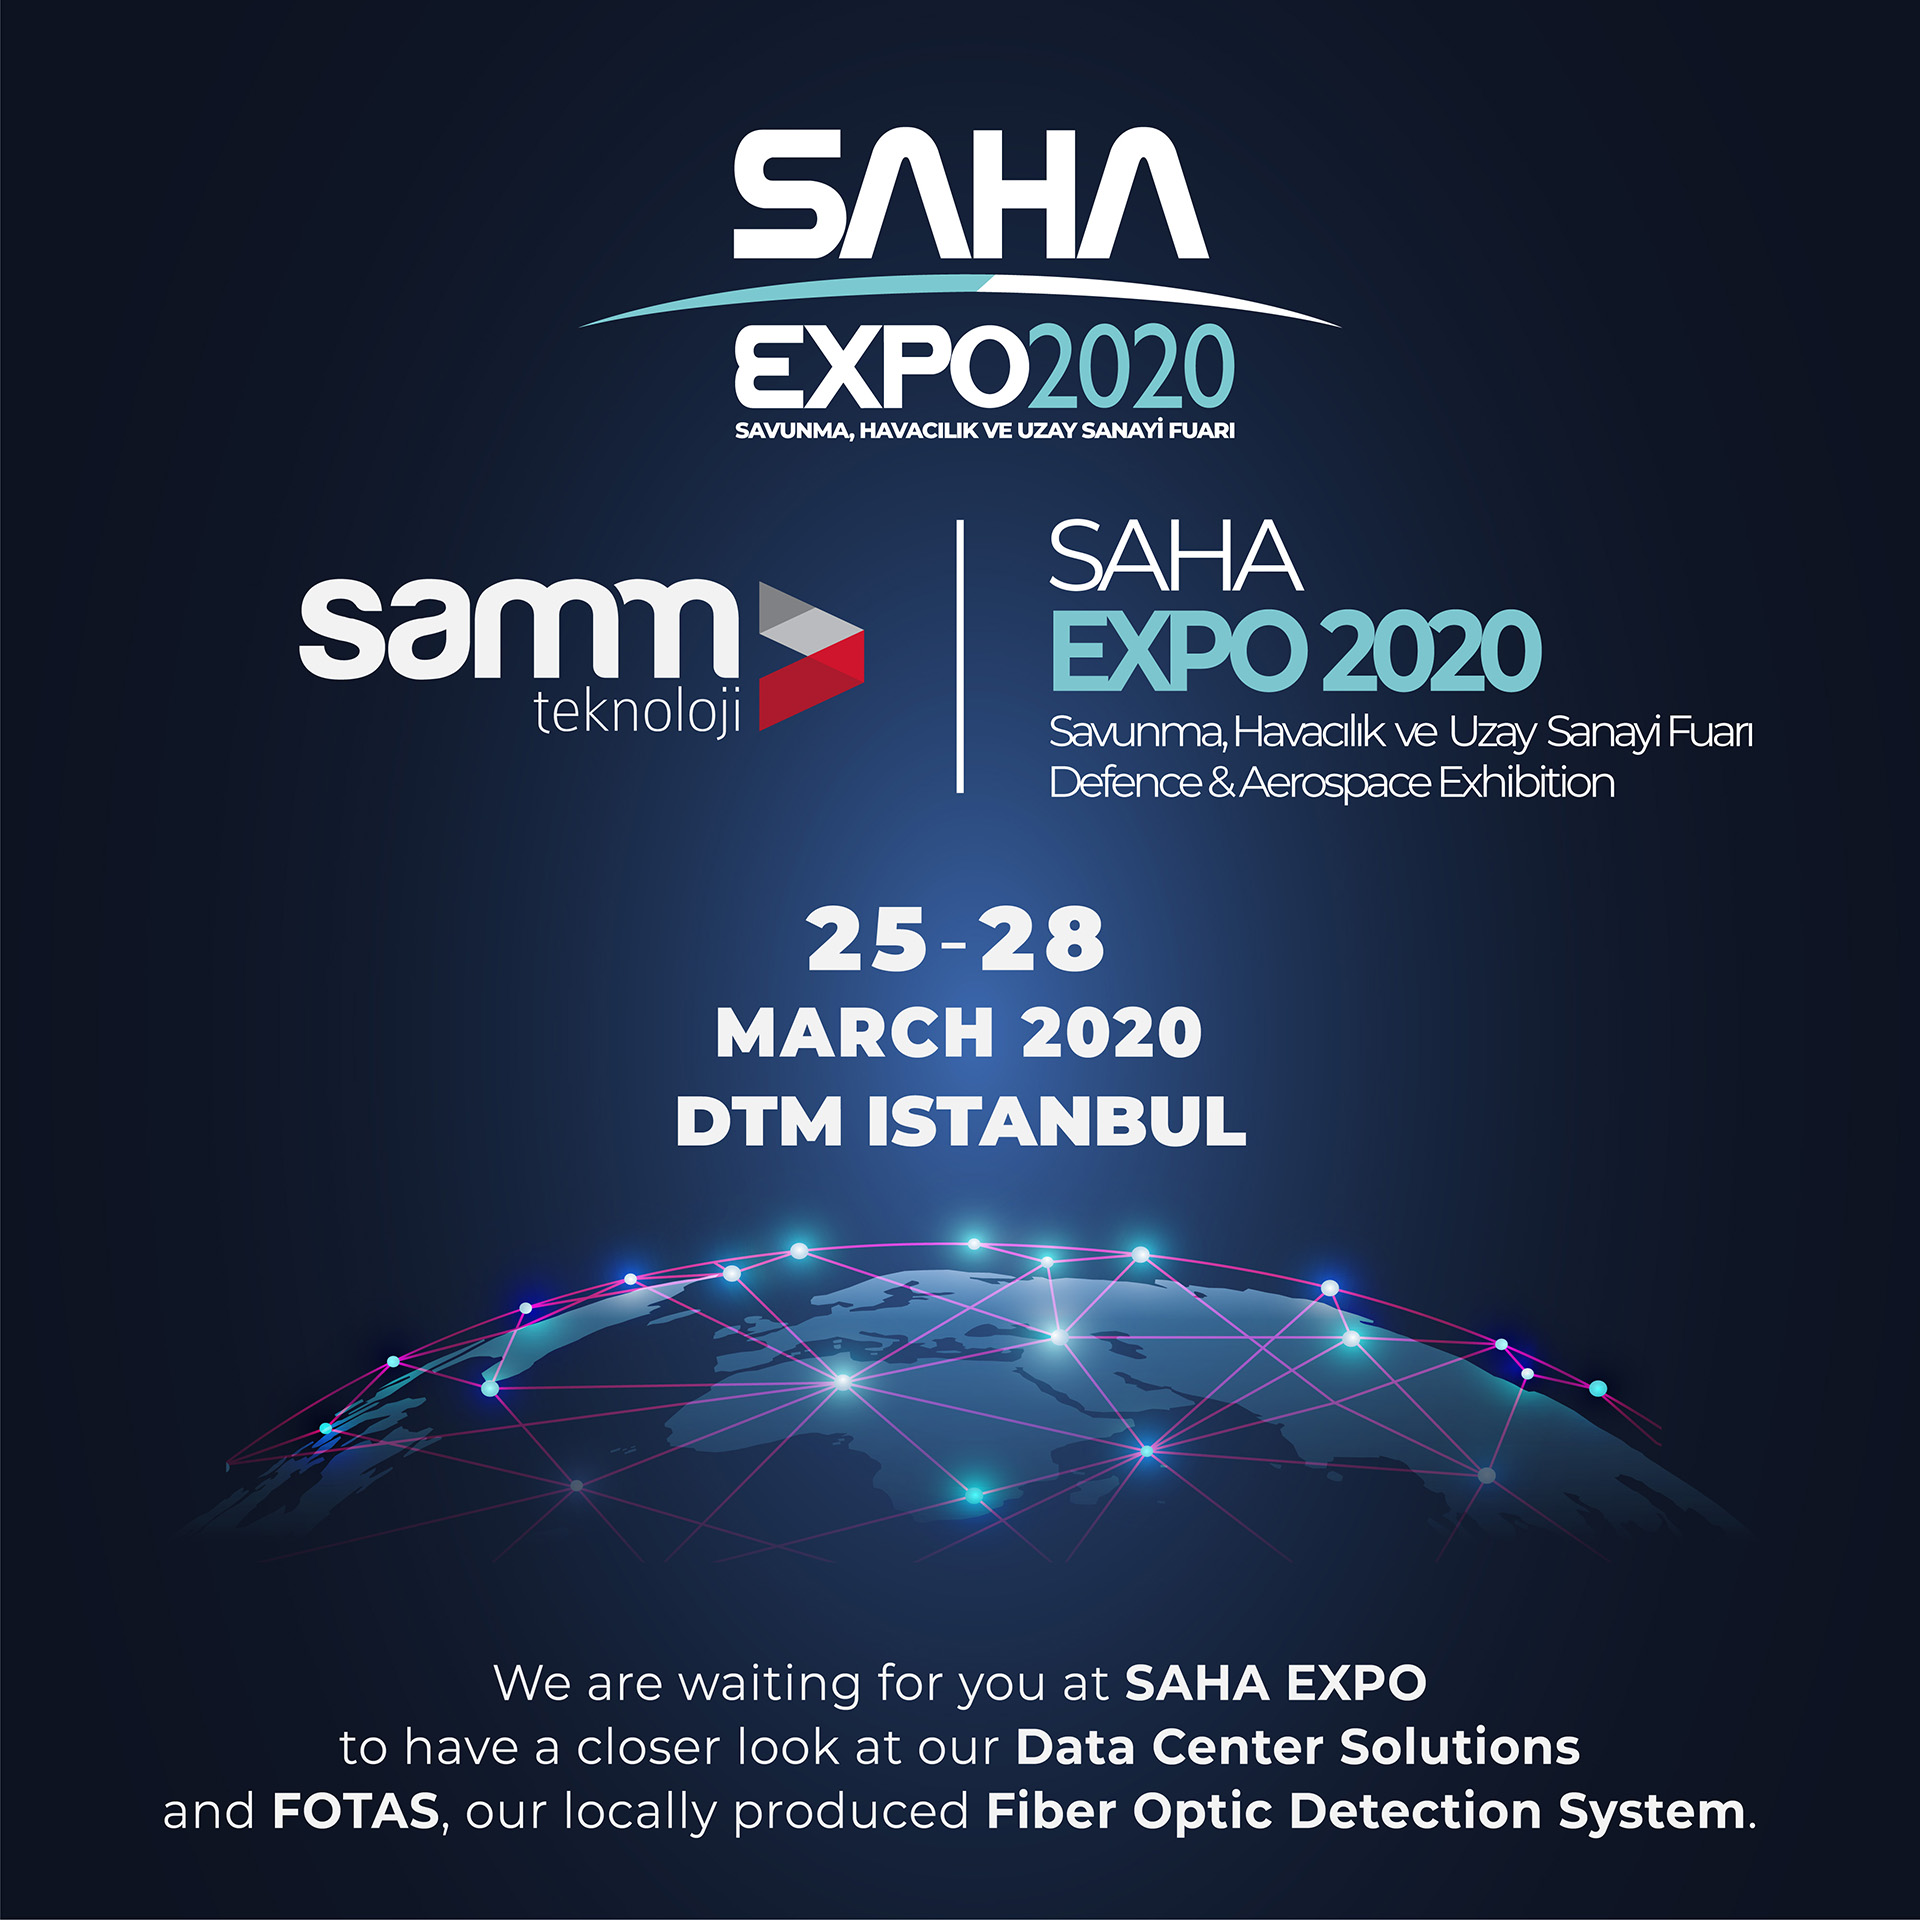 SAHA EXPO 2020 Defense, Aerospace Exhibition | Samm Teknoloji